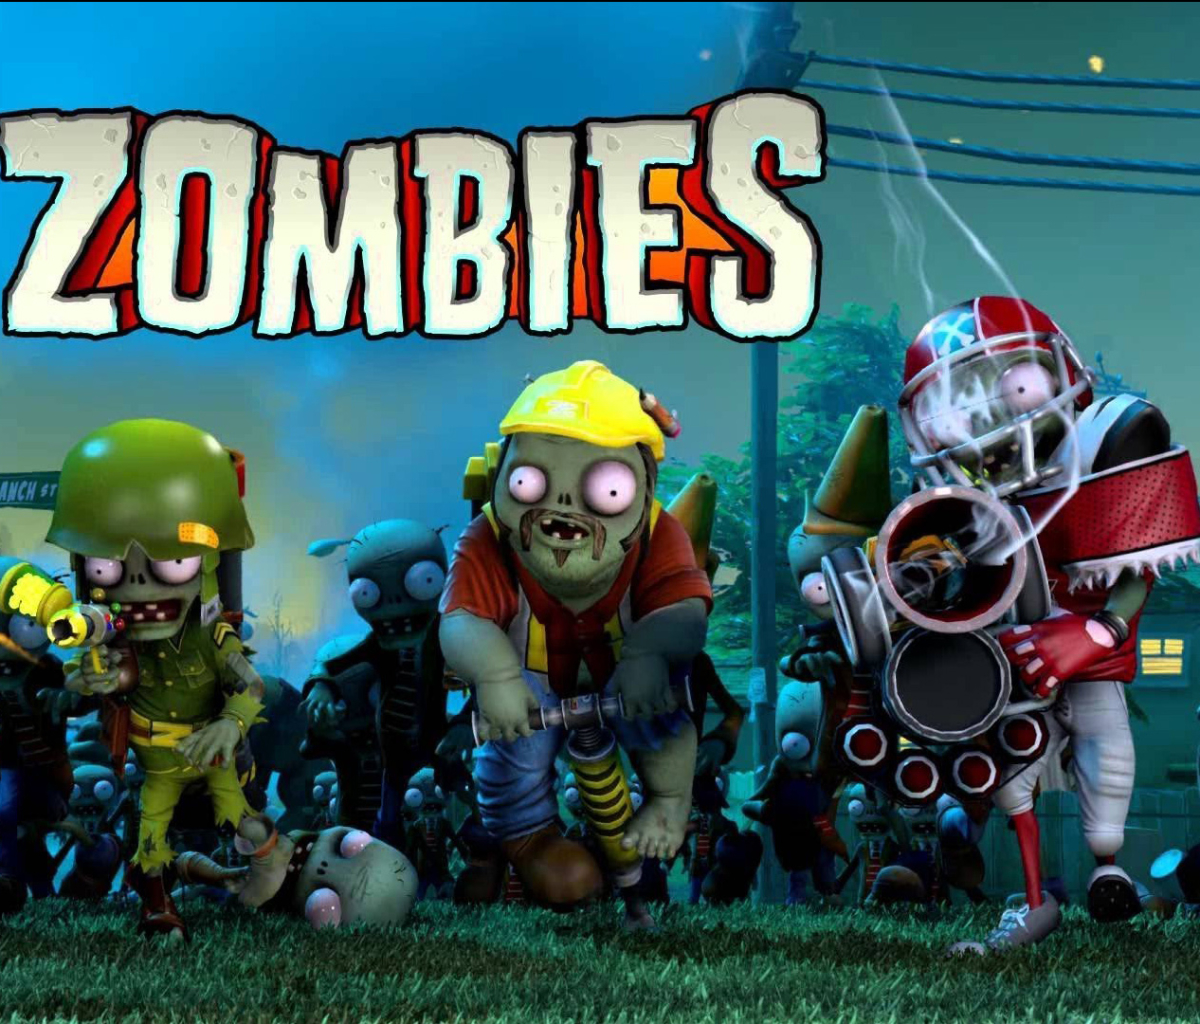 1238221 Bild herunterladen computerspiele, plants vs zombies: garden warfare, wissenschaftler zombie (pflanzen gegen zombies), all star zombie, engineer zombie (pflanzen gegen zombies), foot soldier zombie (pflanzen gegen zombies) - Hintergrundbilder und Bildschirmschoner kostenlos